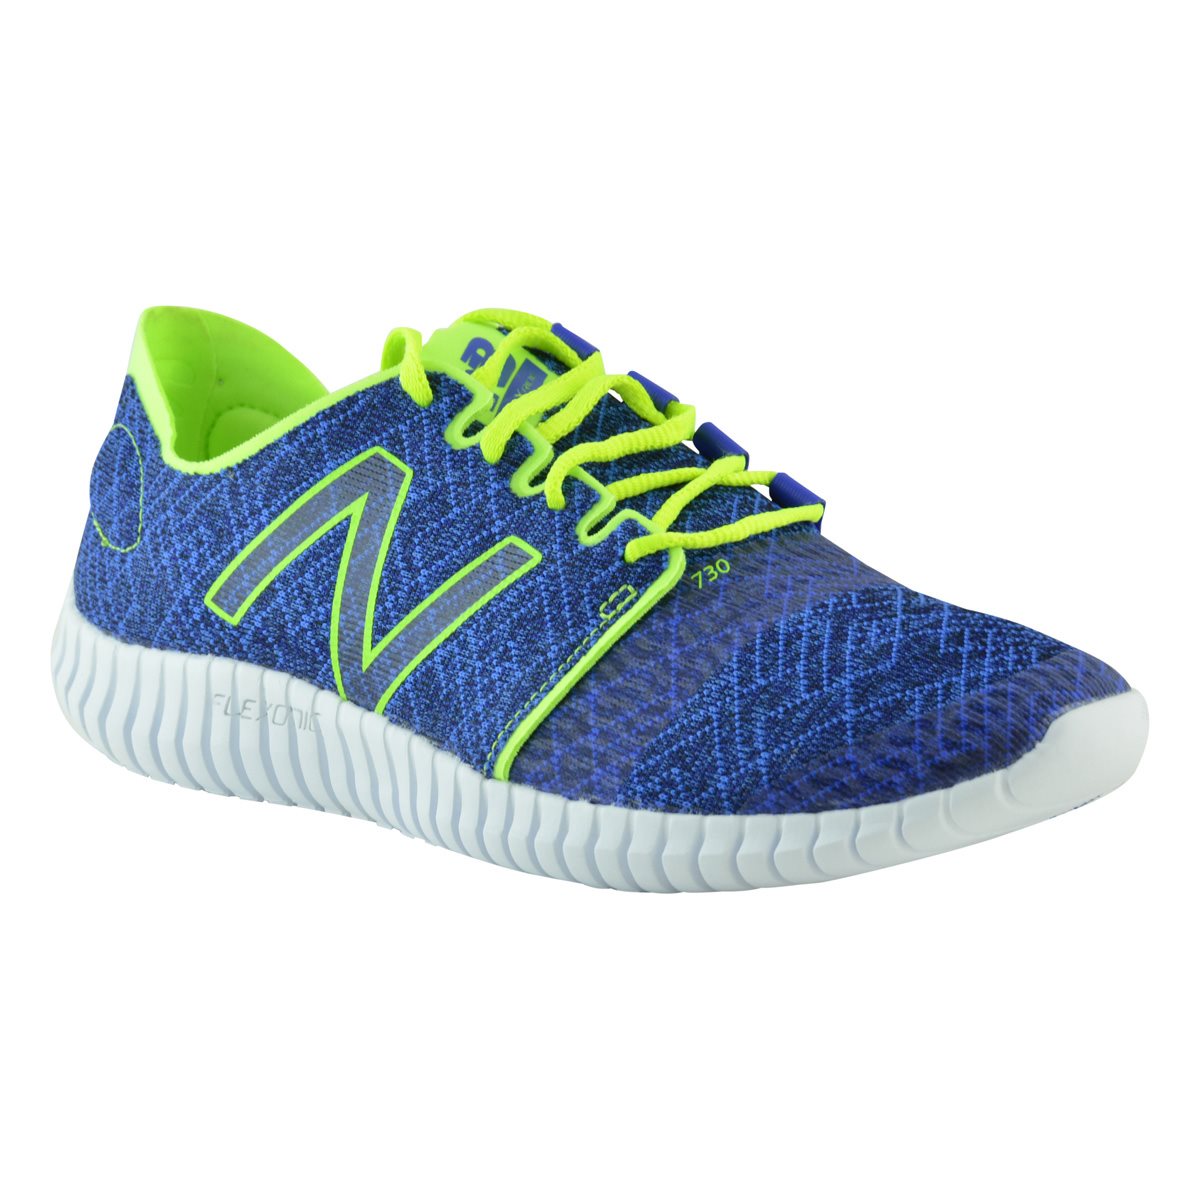 $24.99 ($79.99, 69% off) New Balance 730-V3 Men's Running Shoes